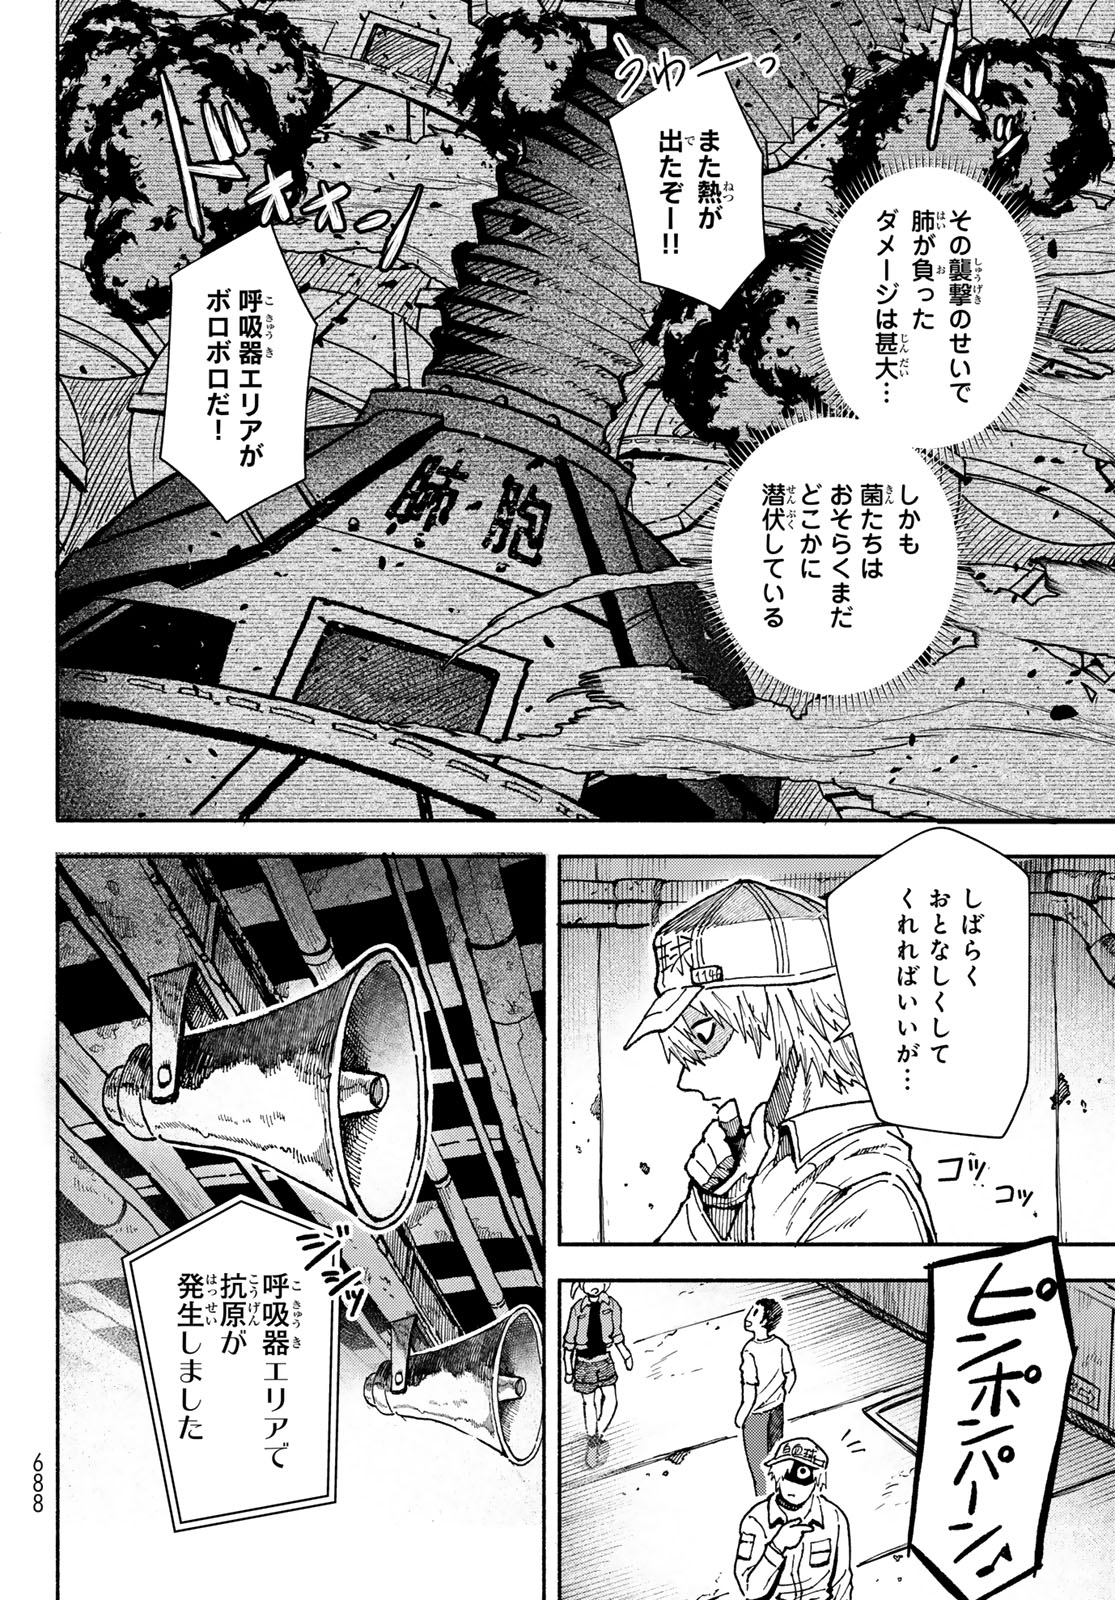 Hataraku Saibou Okusuri - Chapter 9 - Page 4